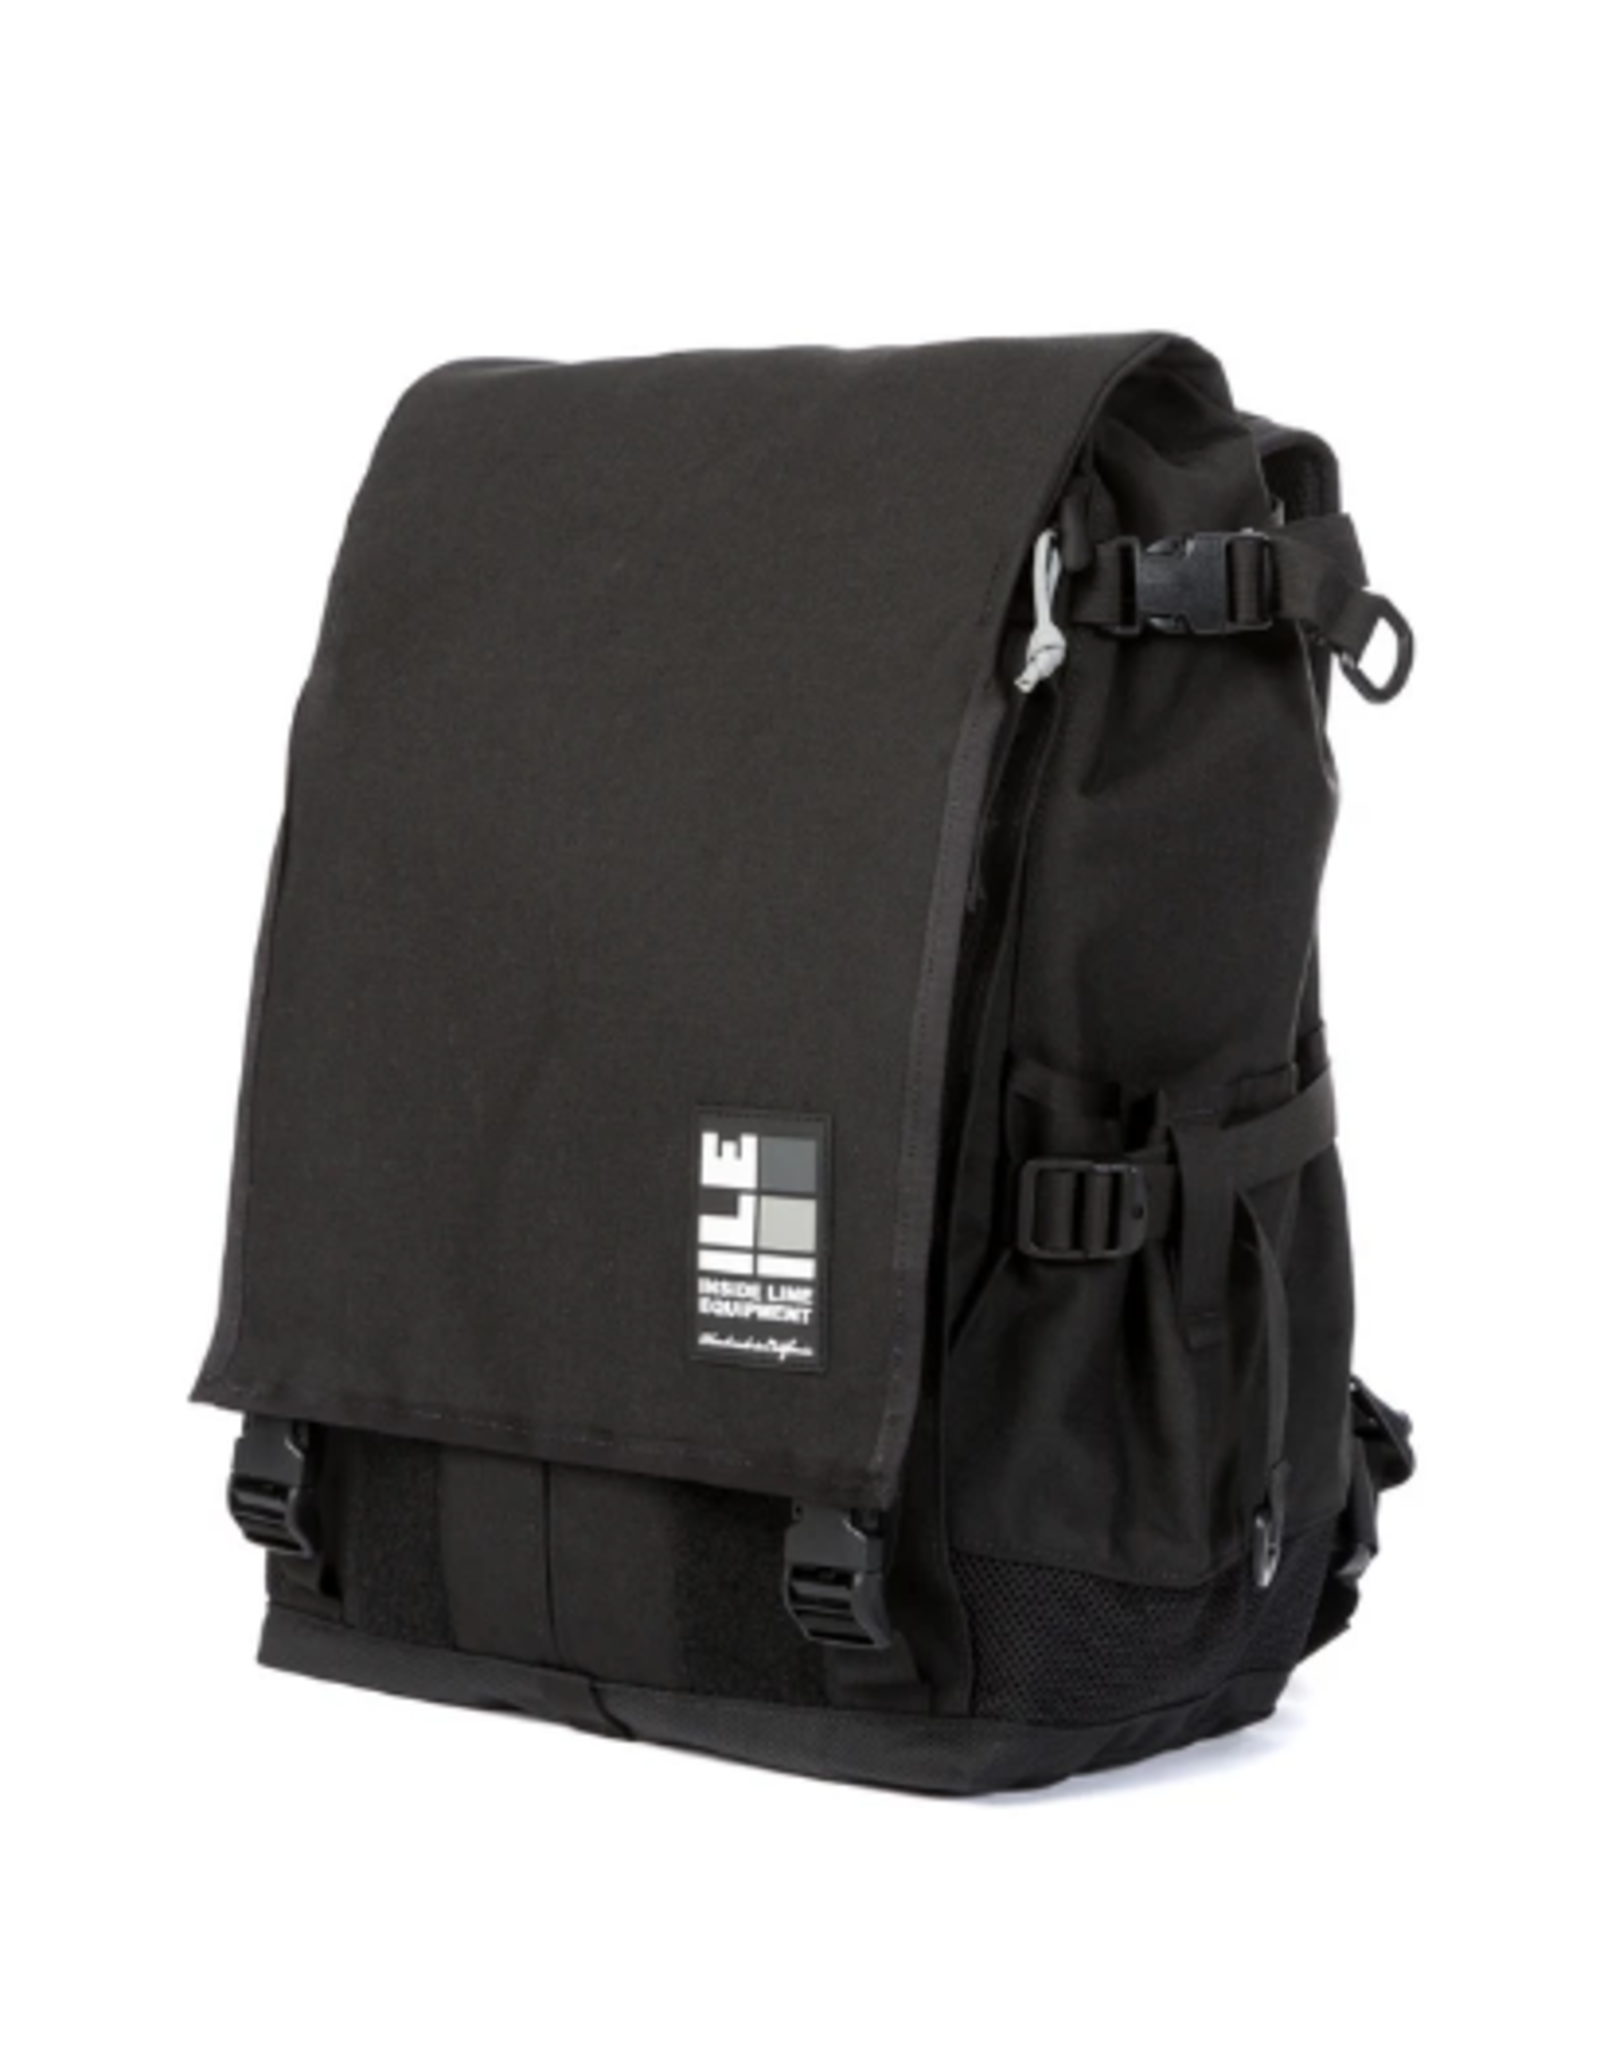 ILE Flaptop Backpack Black Cordura